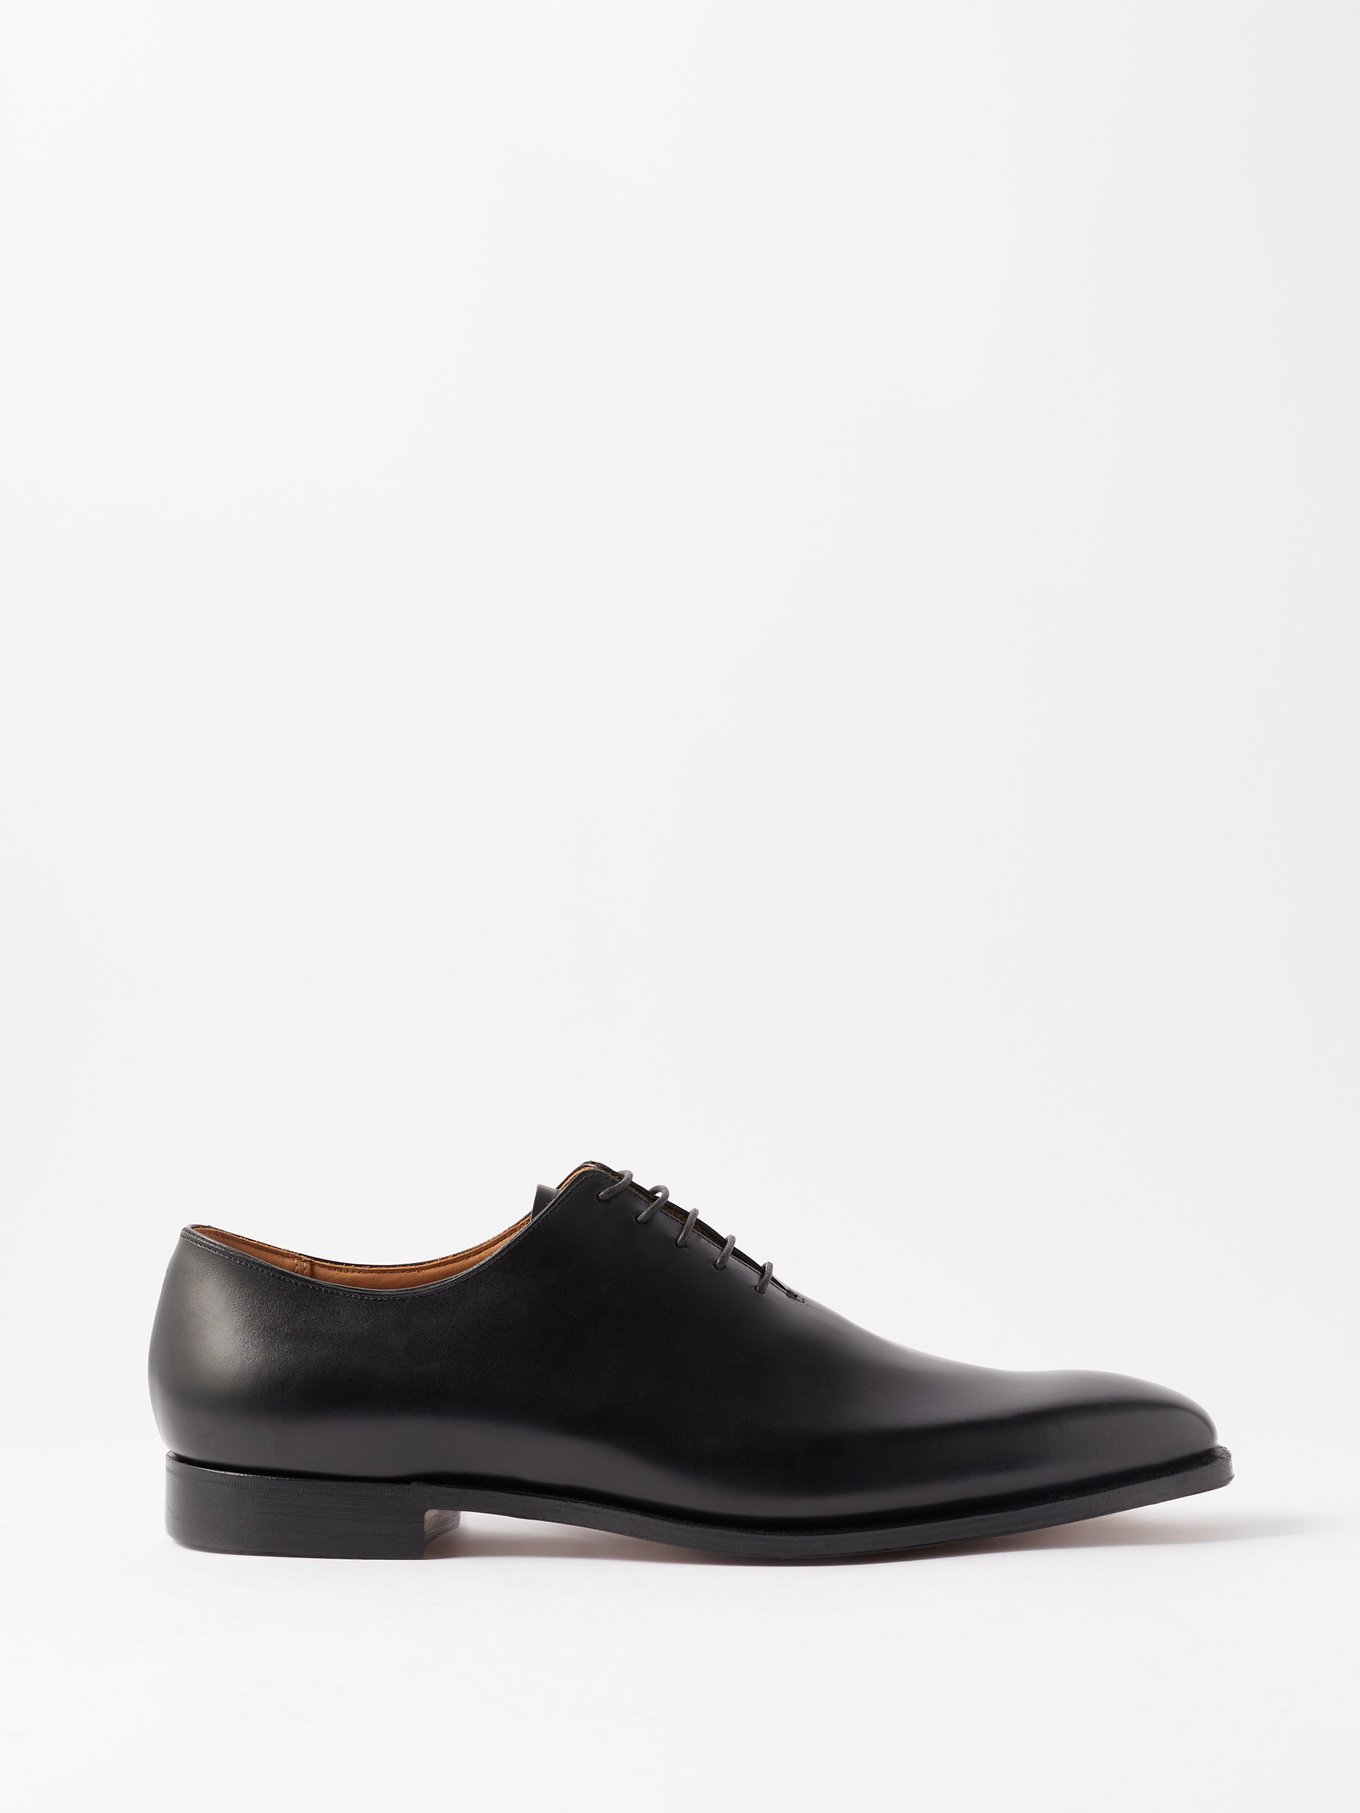 Black Alex leather Derby shoes | Crockett & Jones | MATCHESFASHION